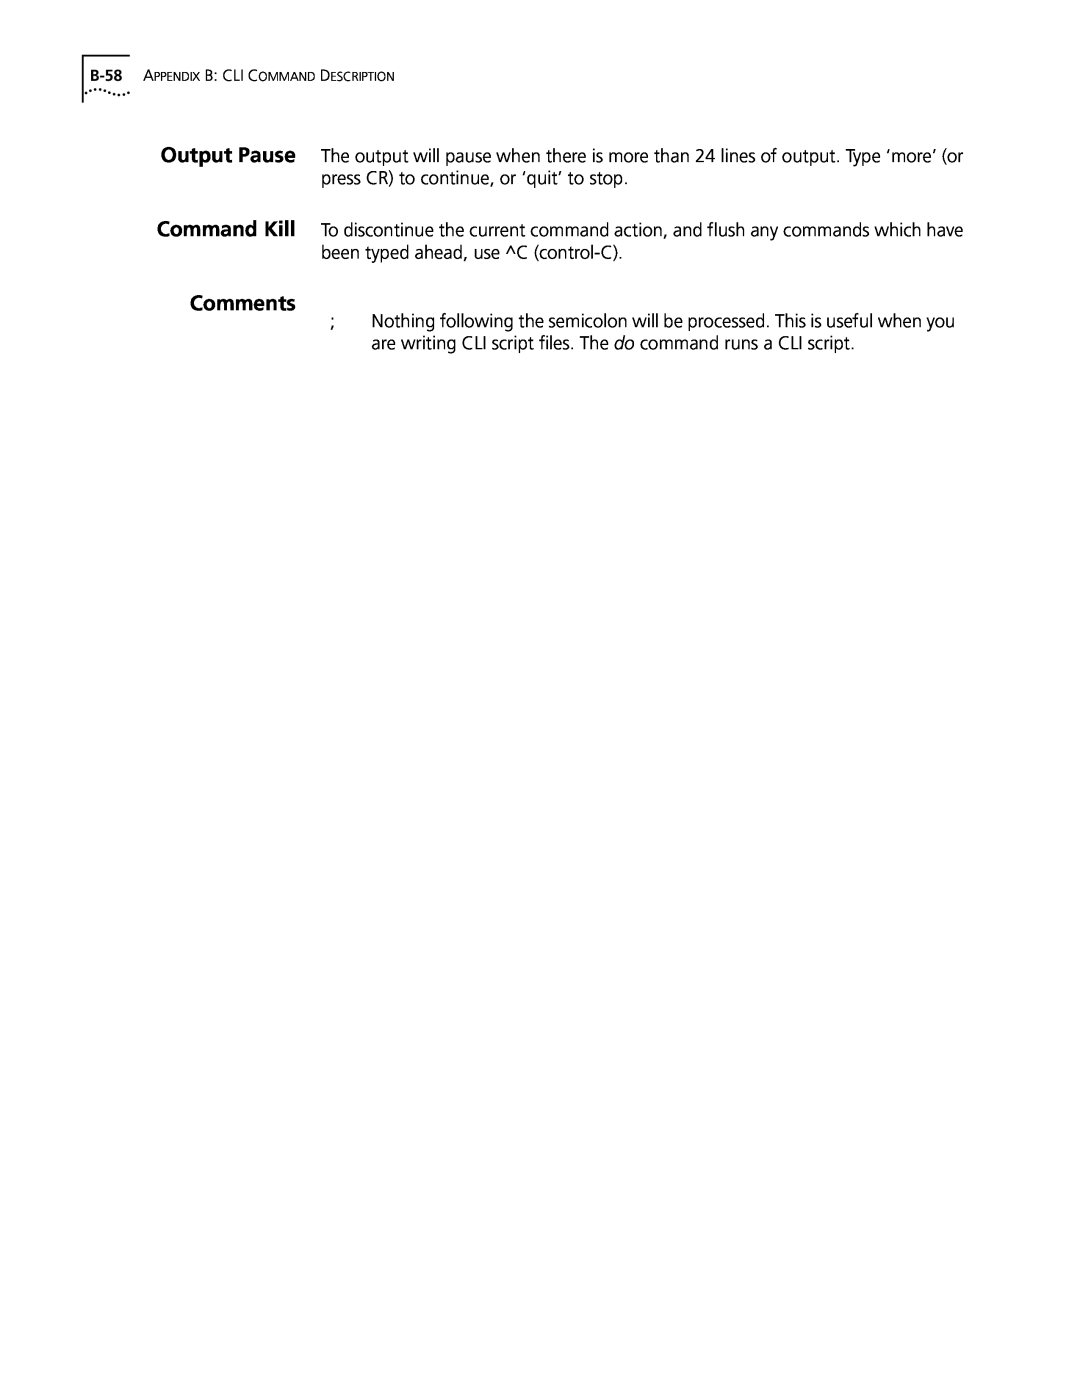 3Com OfficeConnect Remote 812 manual Comments, B-58 APPENDIX B CLI COMMAND DESCRIPTION 